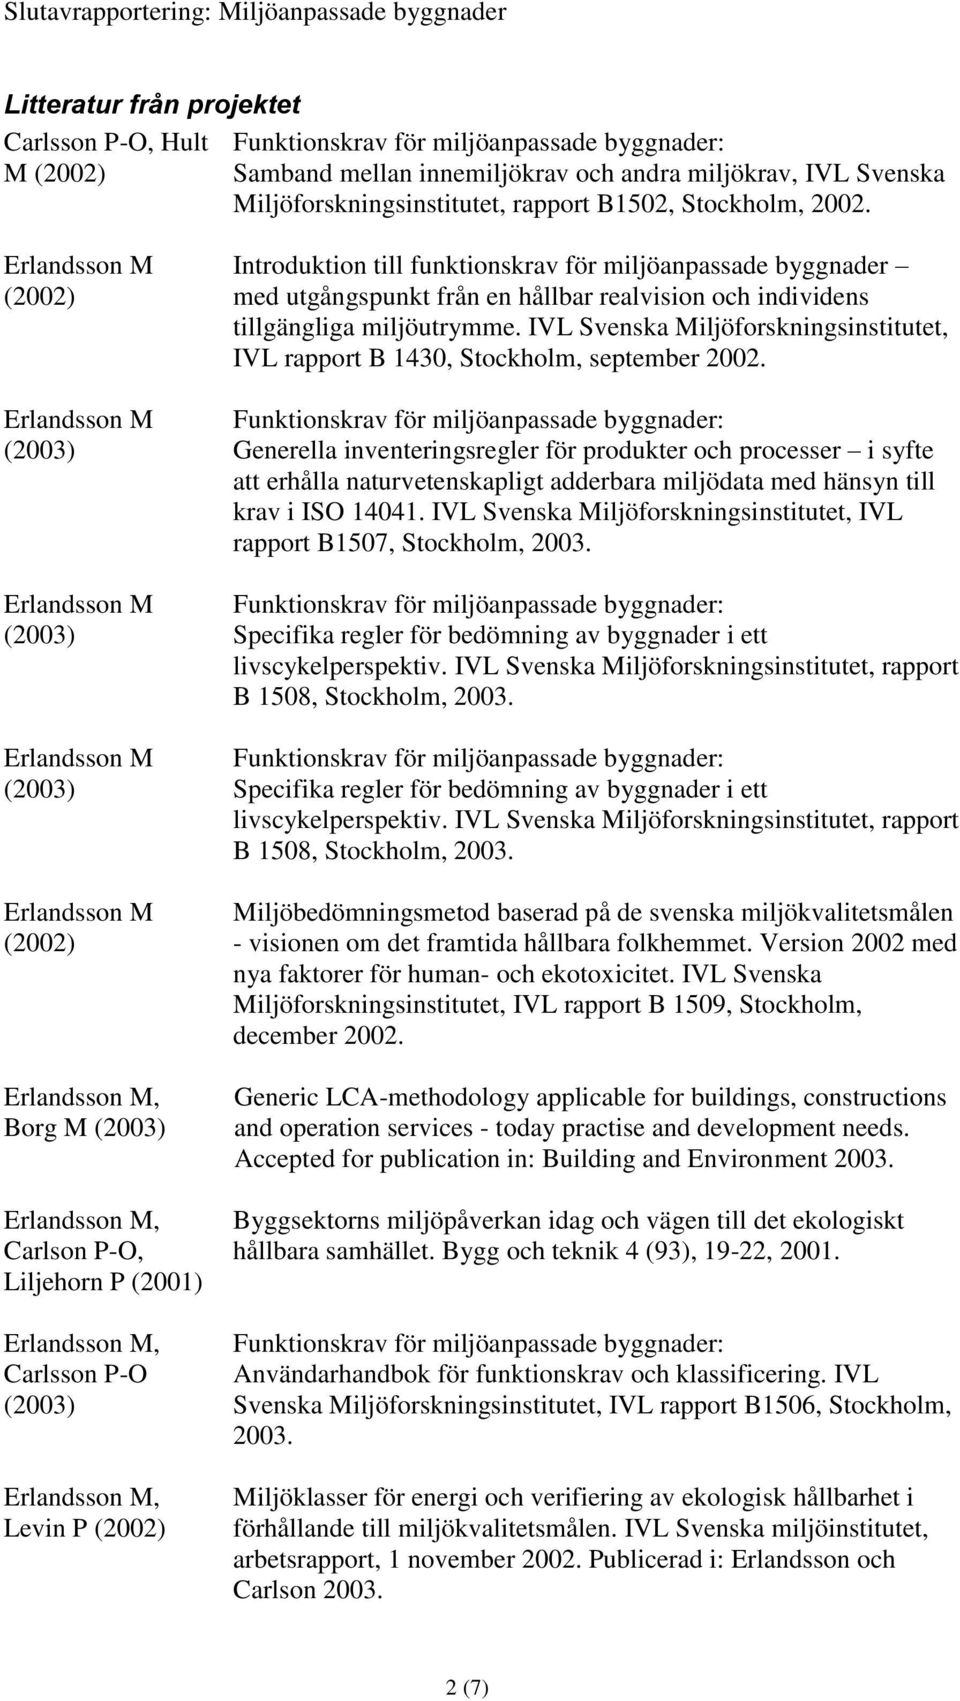 miljöutrymme. IVL Svenska Miljöforskningsinstitutet, IVL rapport B 1430, Stockholm, september 2002.